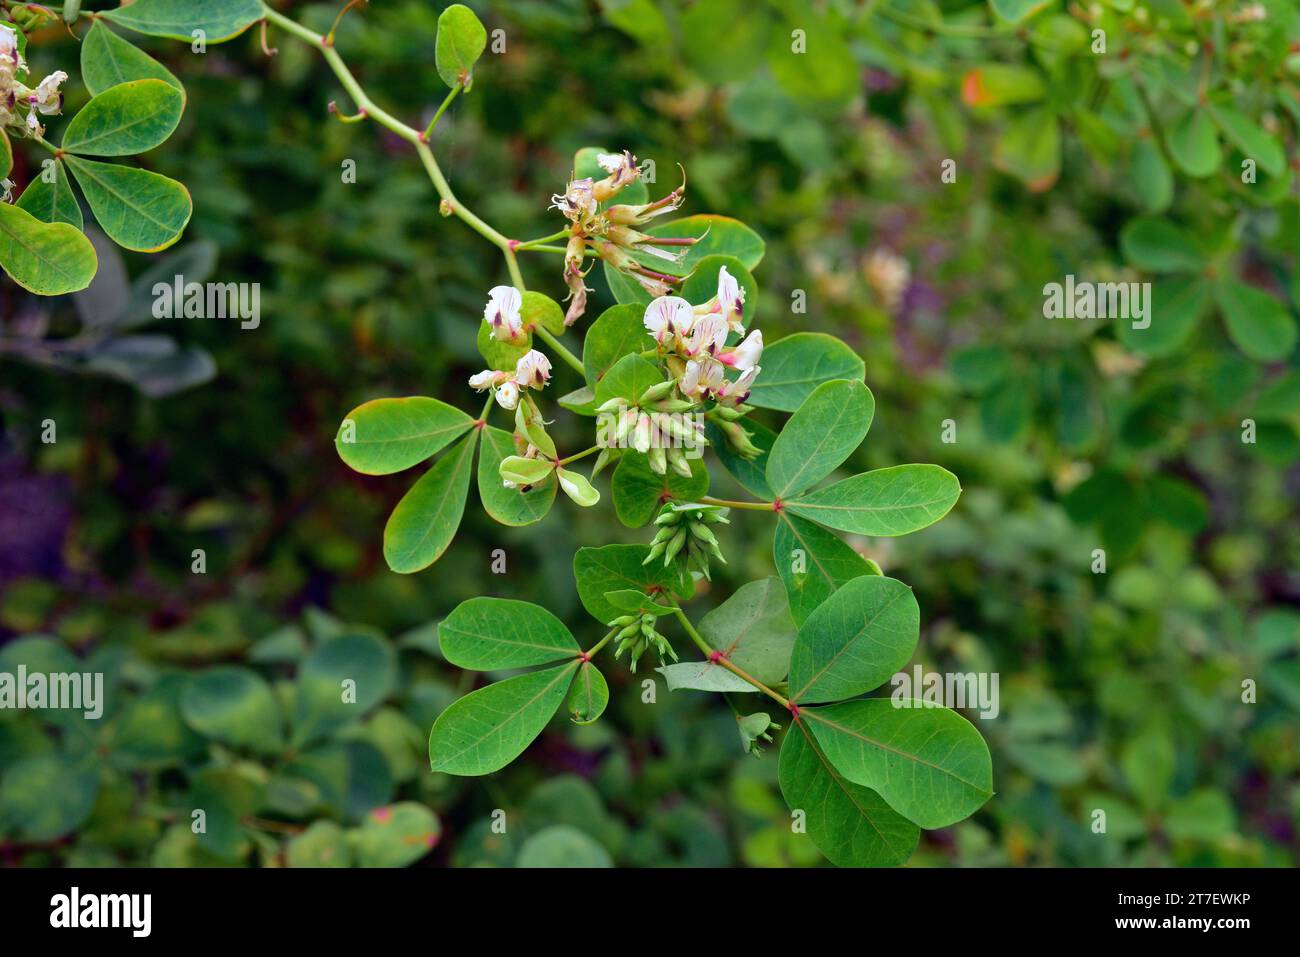 Trebol de risco de Broussonet (Dorycnium broussonetii) is a shrub endemic to Gran Canaria and Tenerife, Canary Islands, Spain. Stock Photo